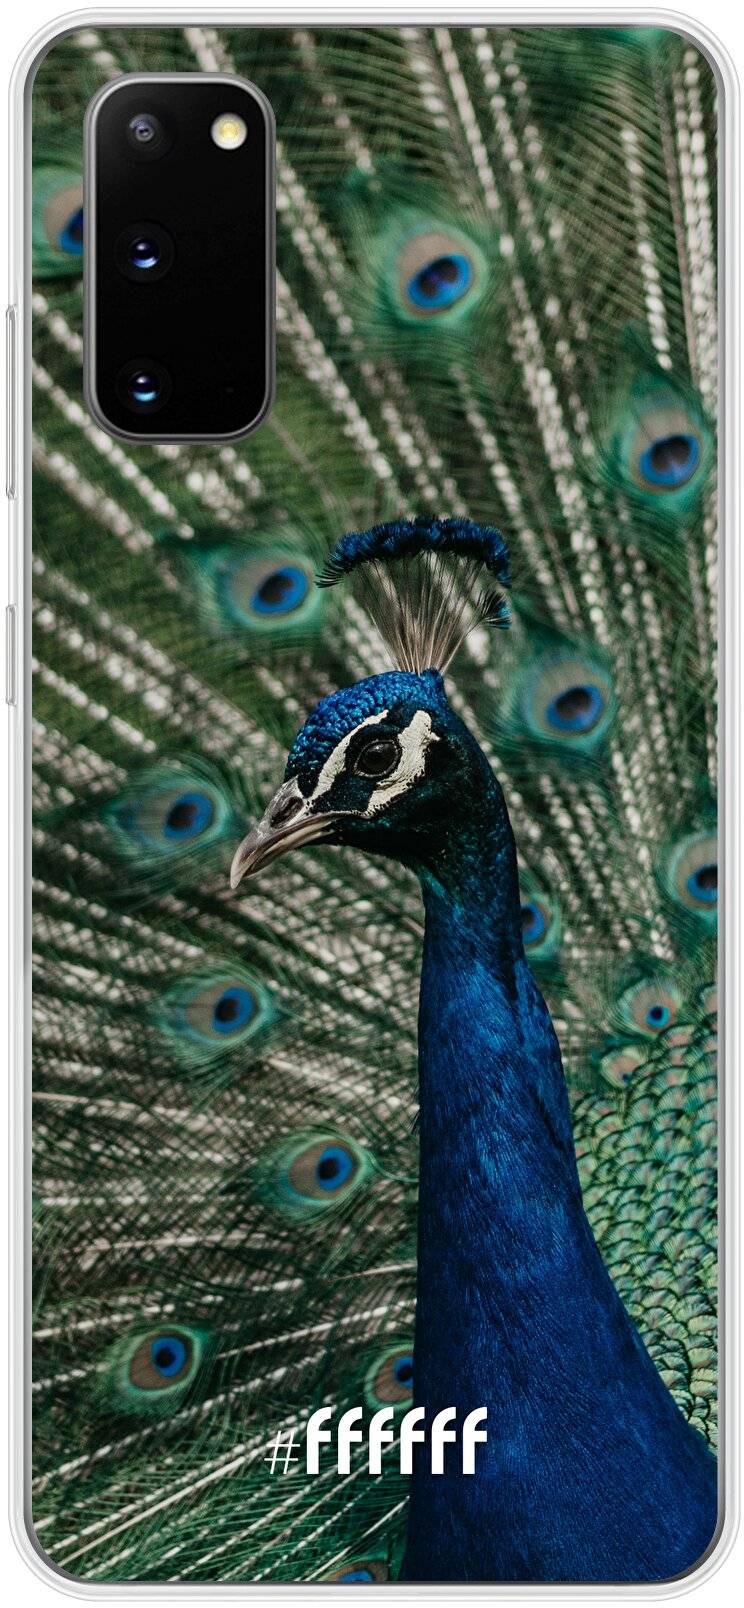 Peacock Galaxy S20